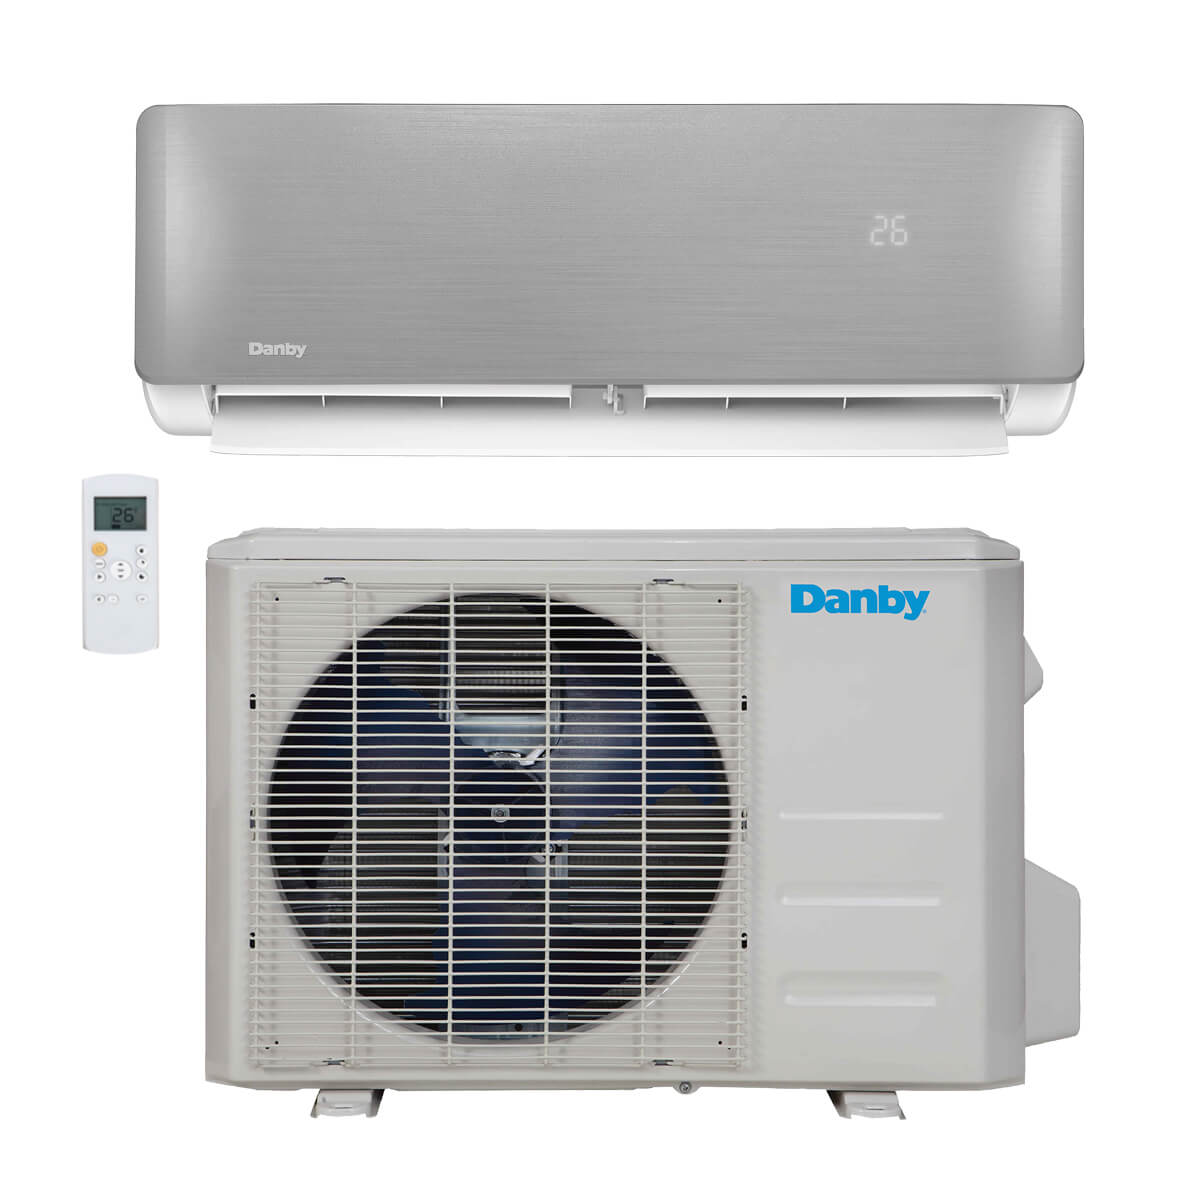 Das Bahwdb Danby Btu Mini Split Air Conditioner With Heat